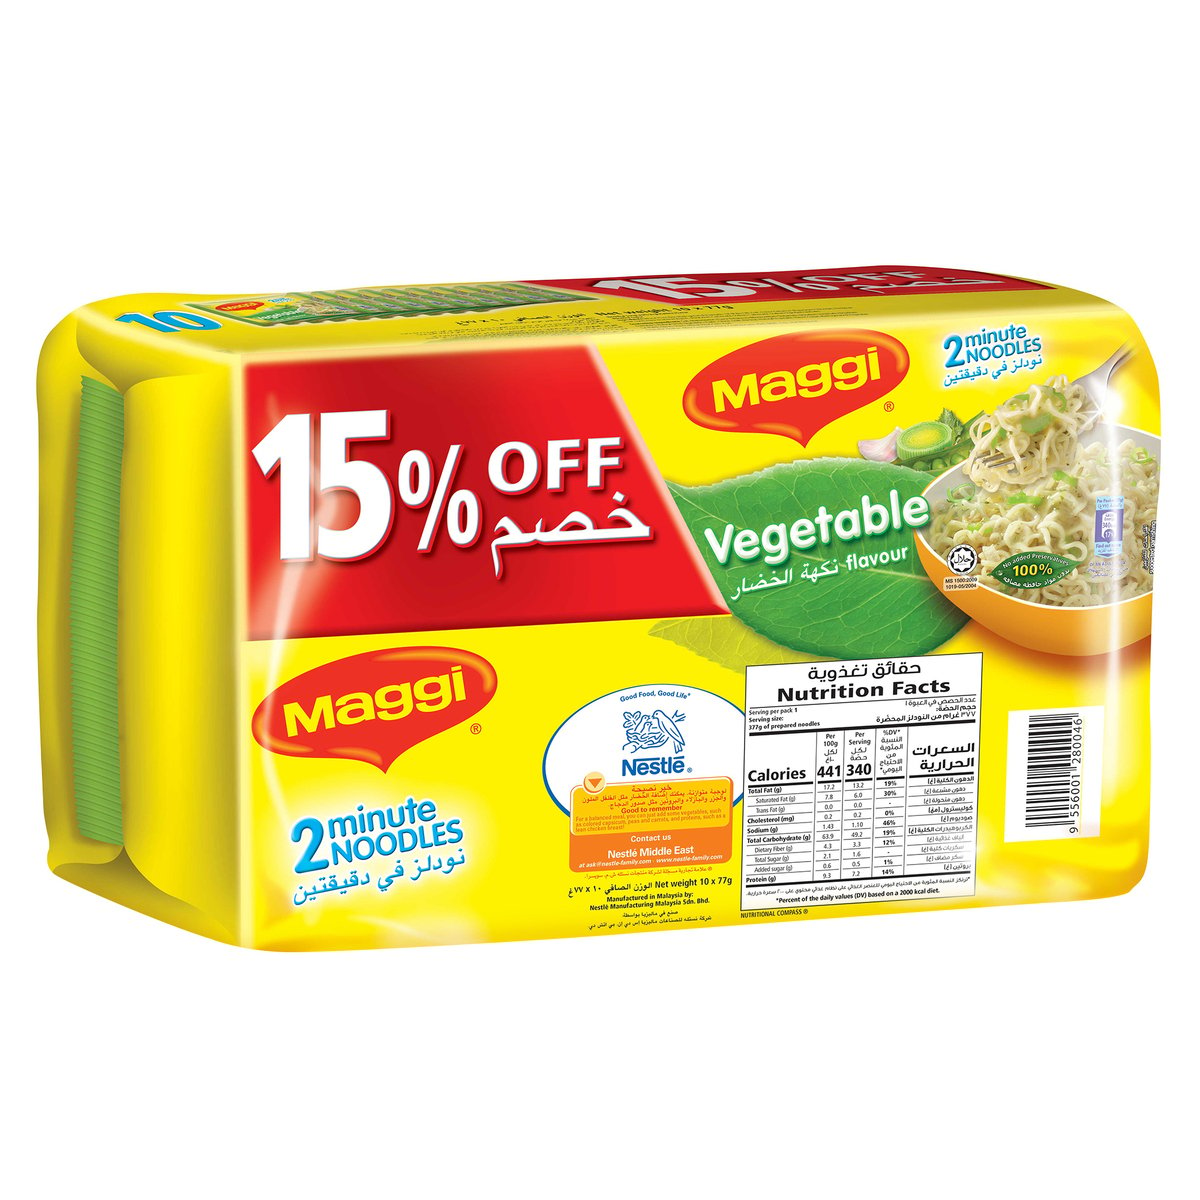 Maggi 2 Minutes Vegetable Noodles 10 x 77 g